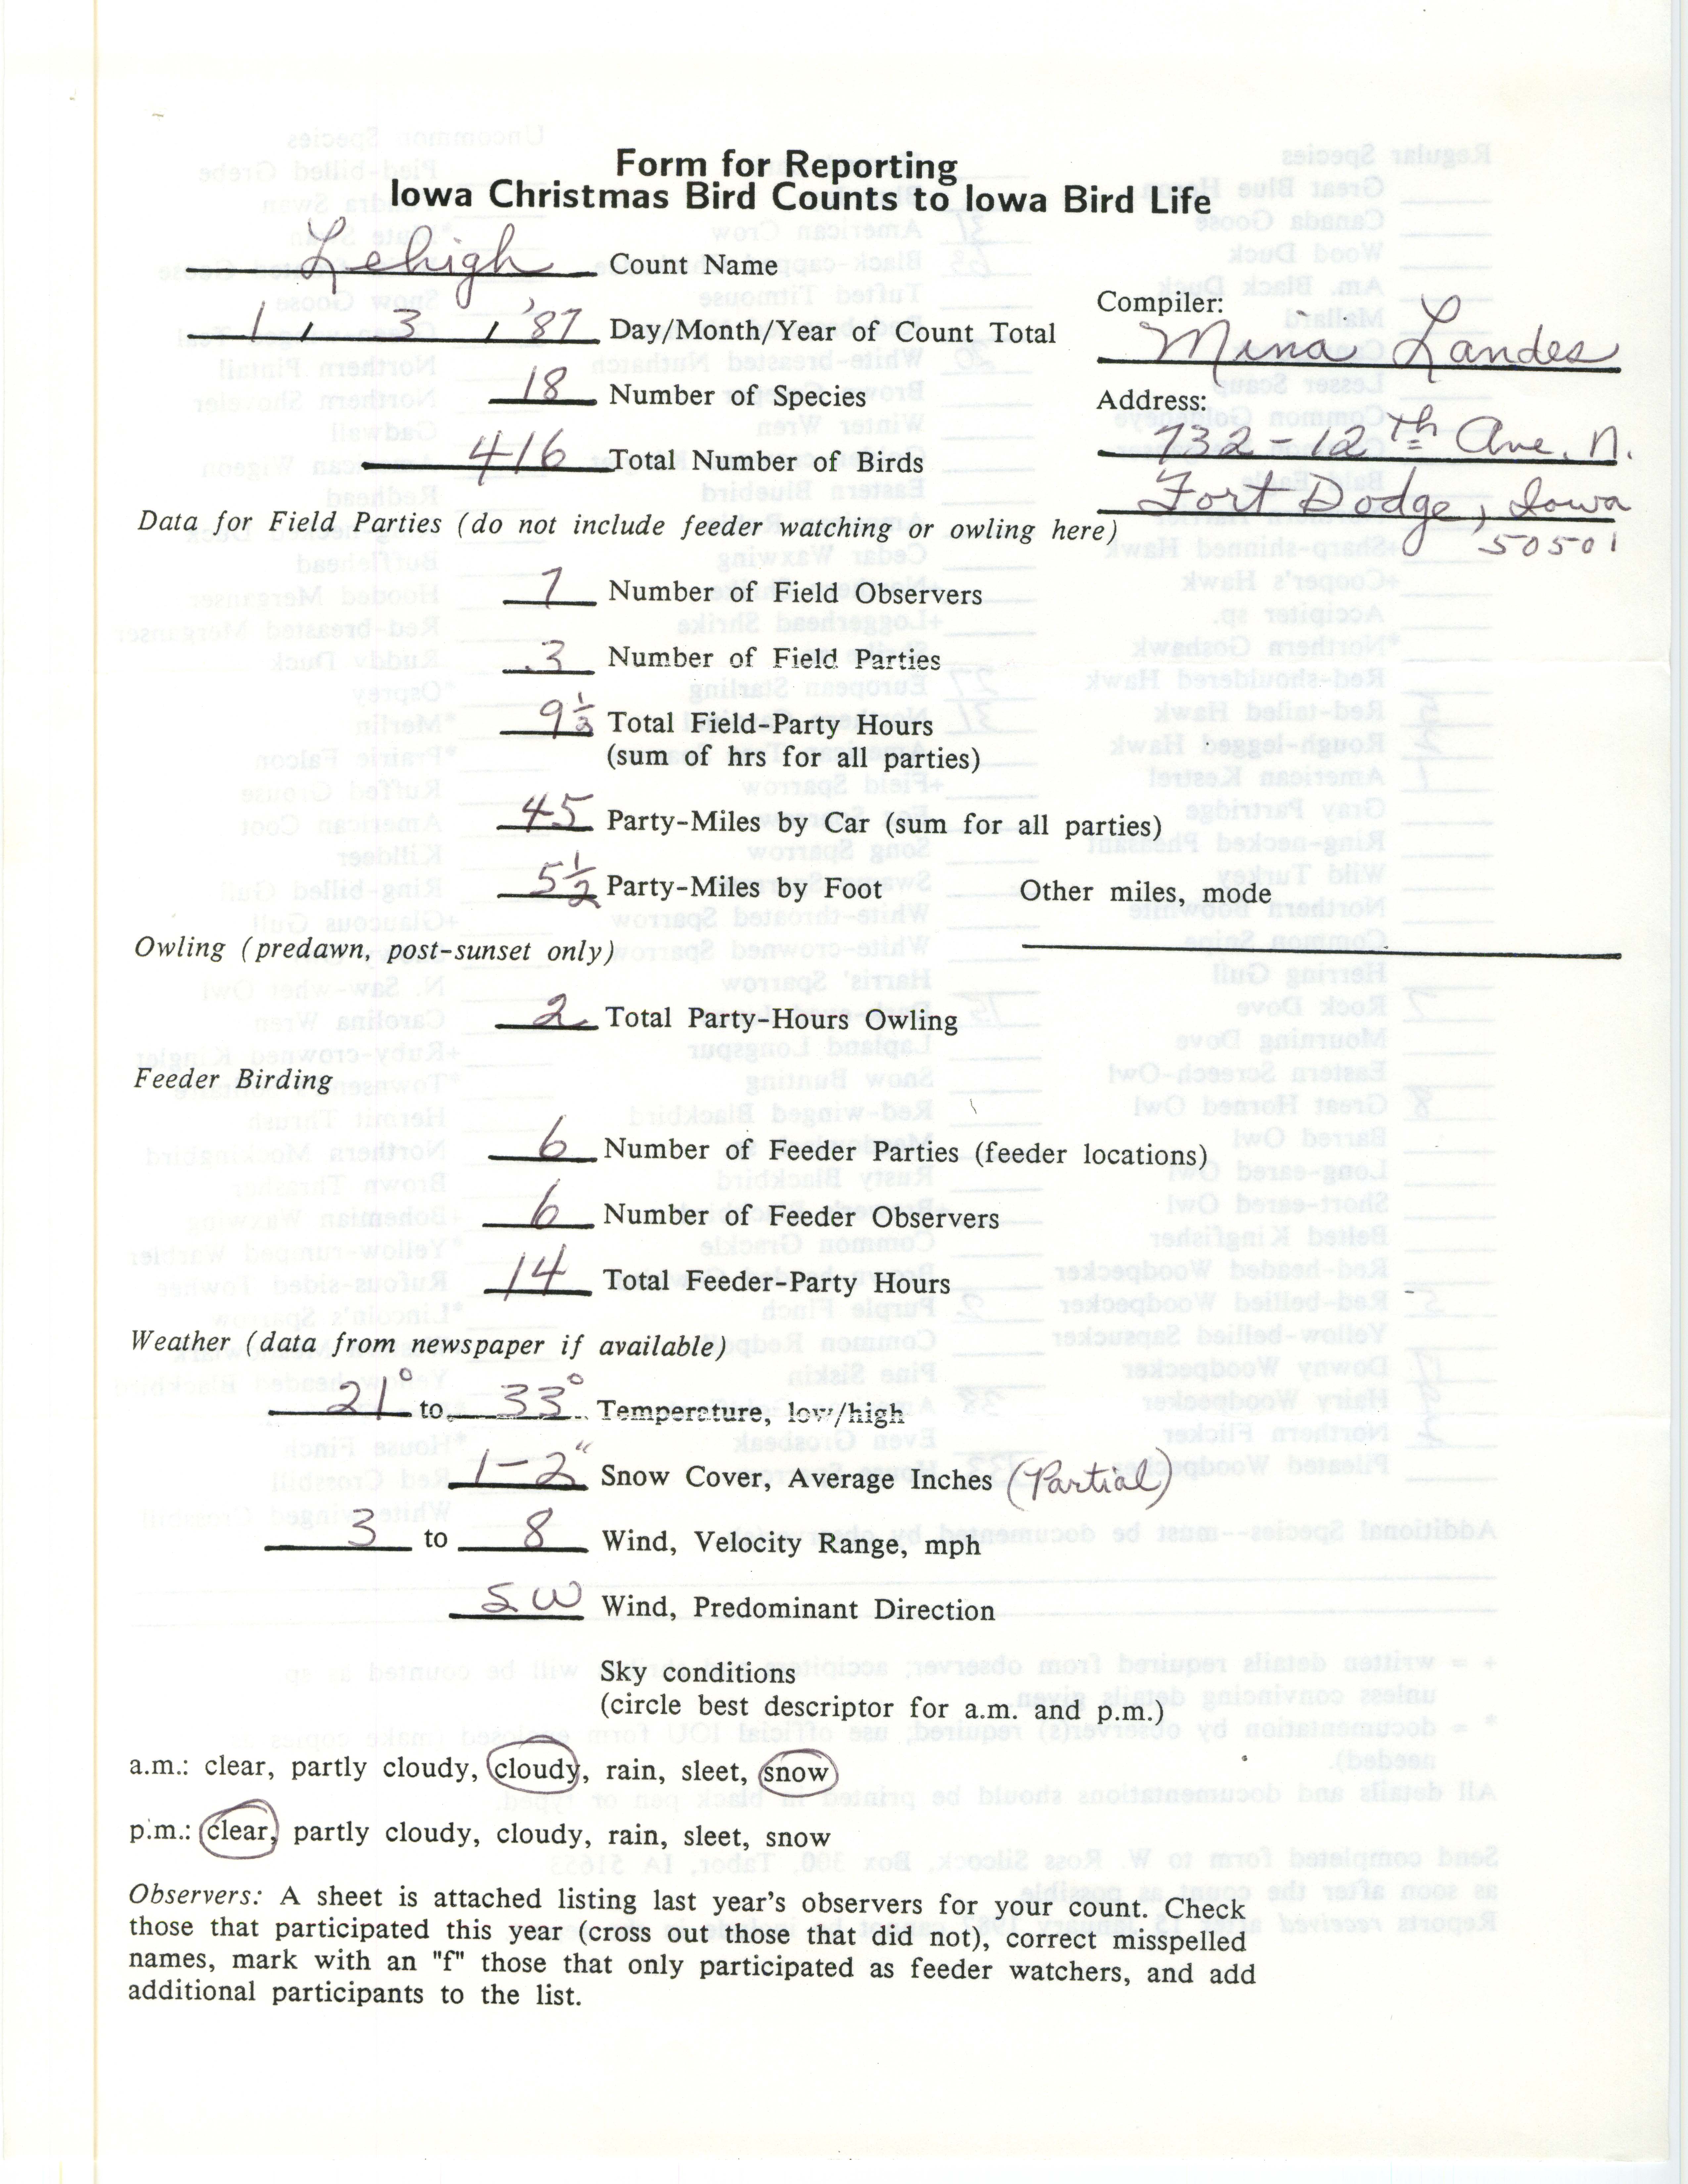 Form for reporting Iowa Christmas bird counts to Iowa Bird Life, Mina Landes, January 3, 1987